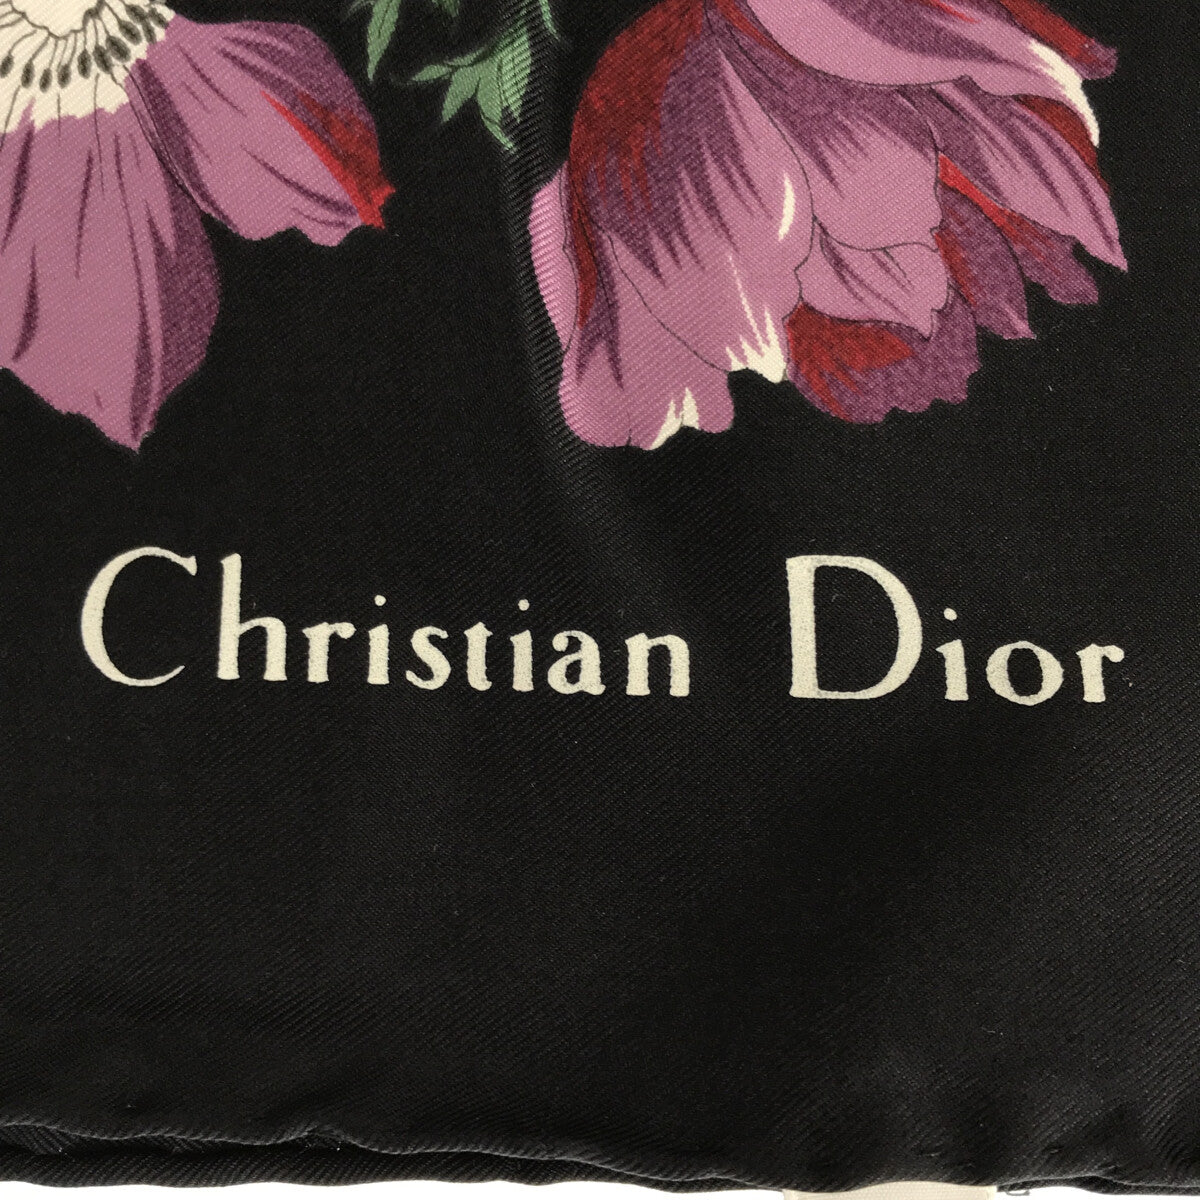 Christian Dior / クリスチャンディオール | イタリア製 花柄 フラワー プリント シルク スカーフ |